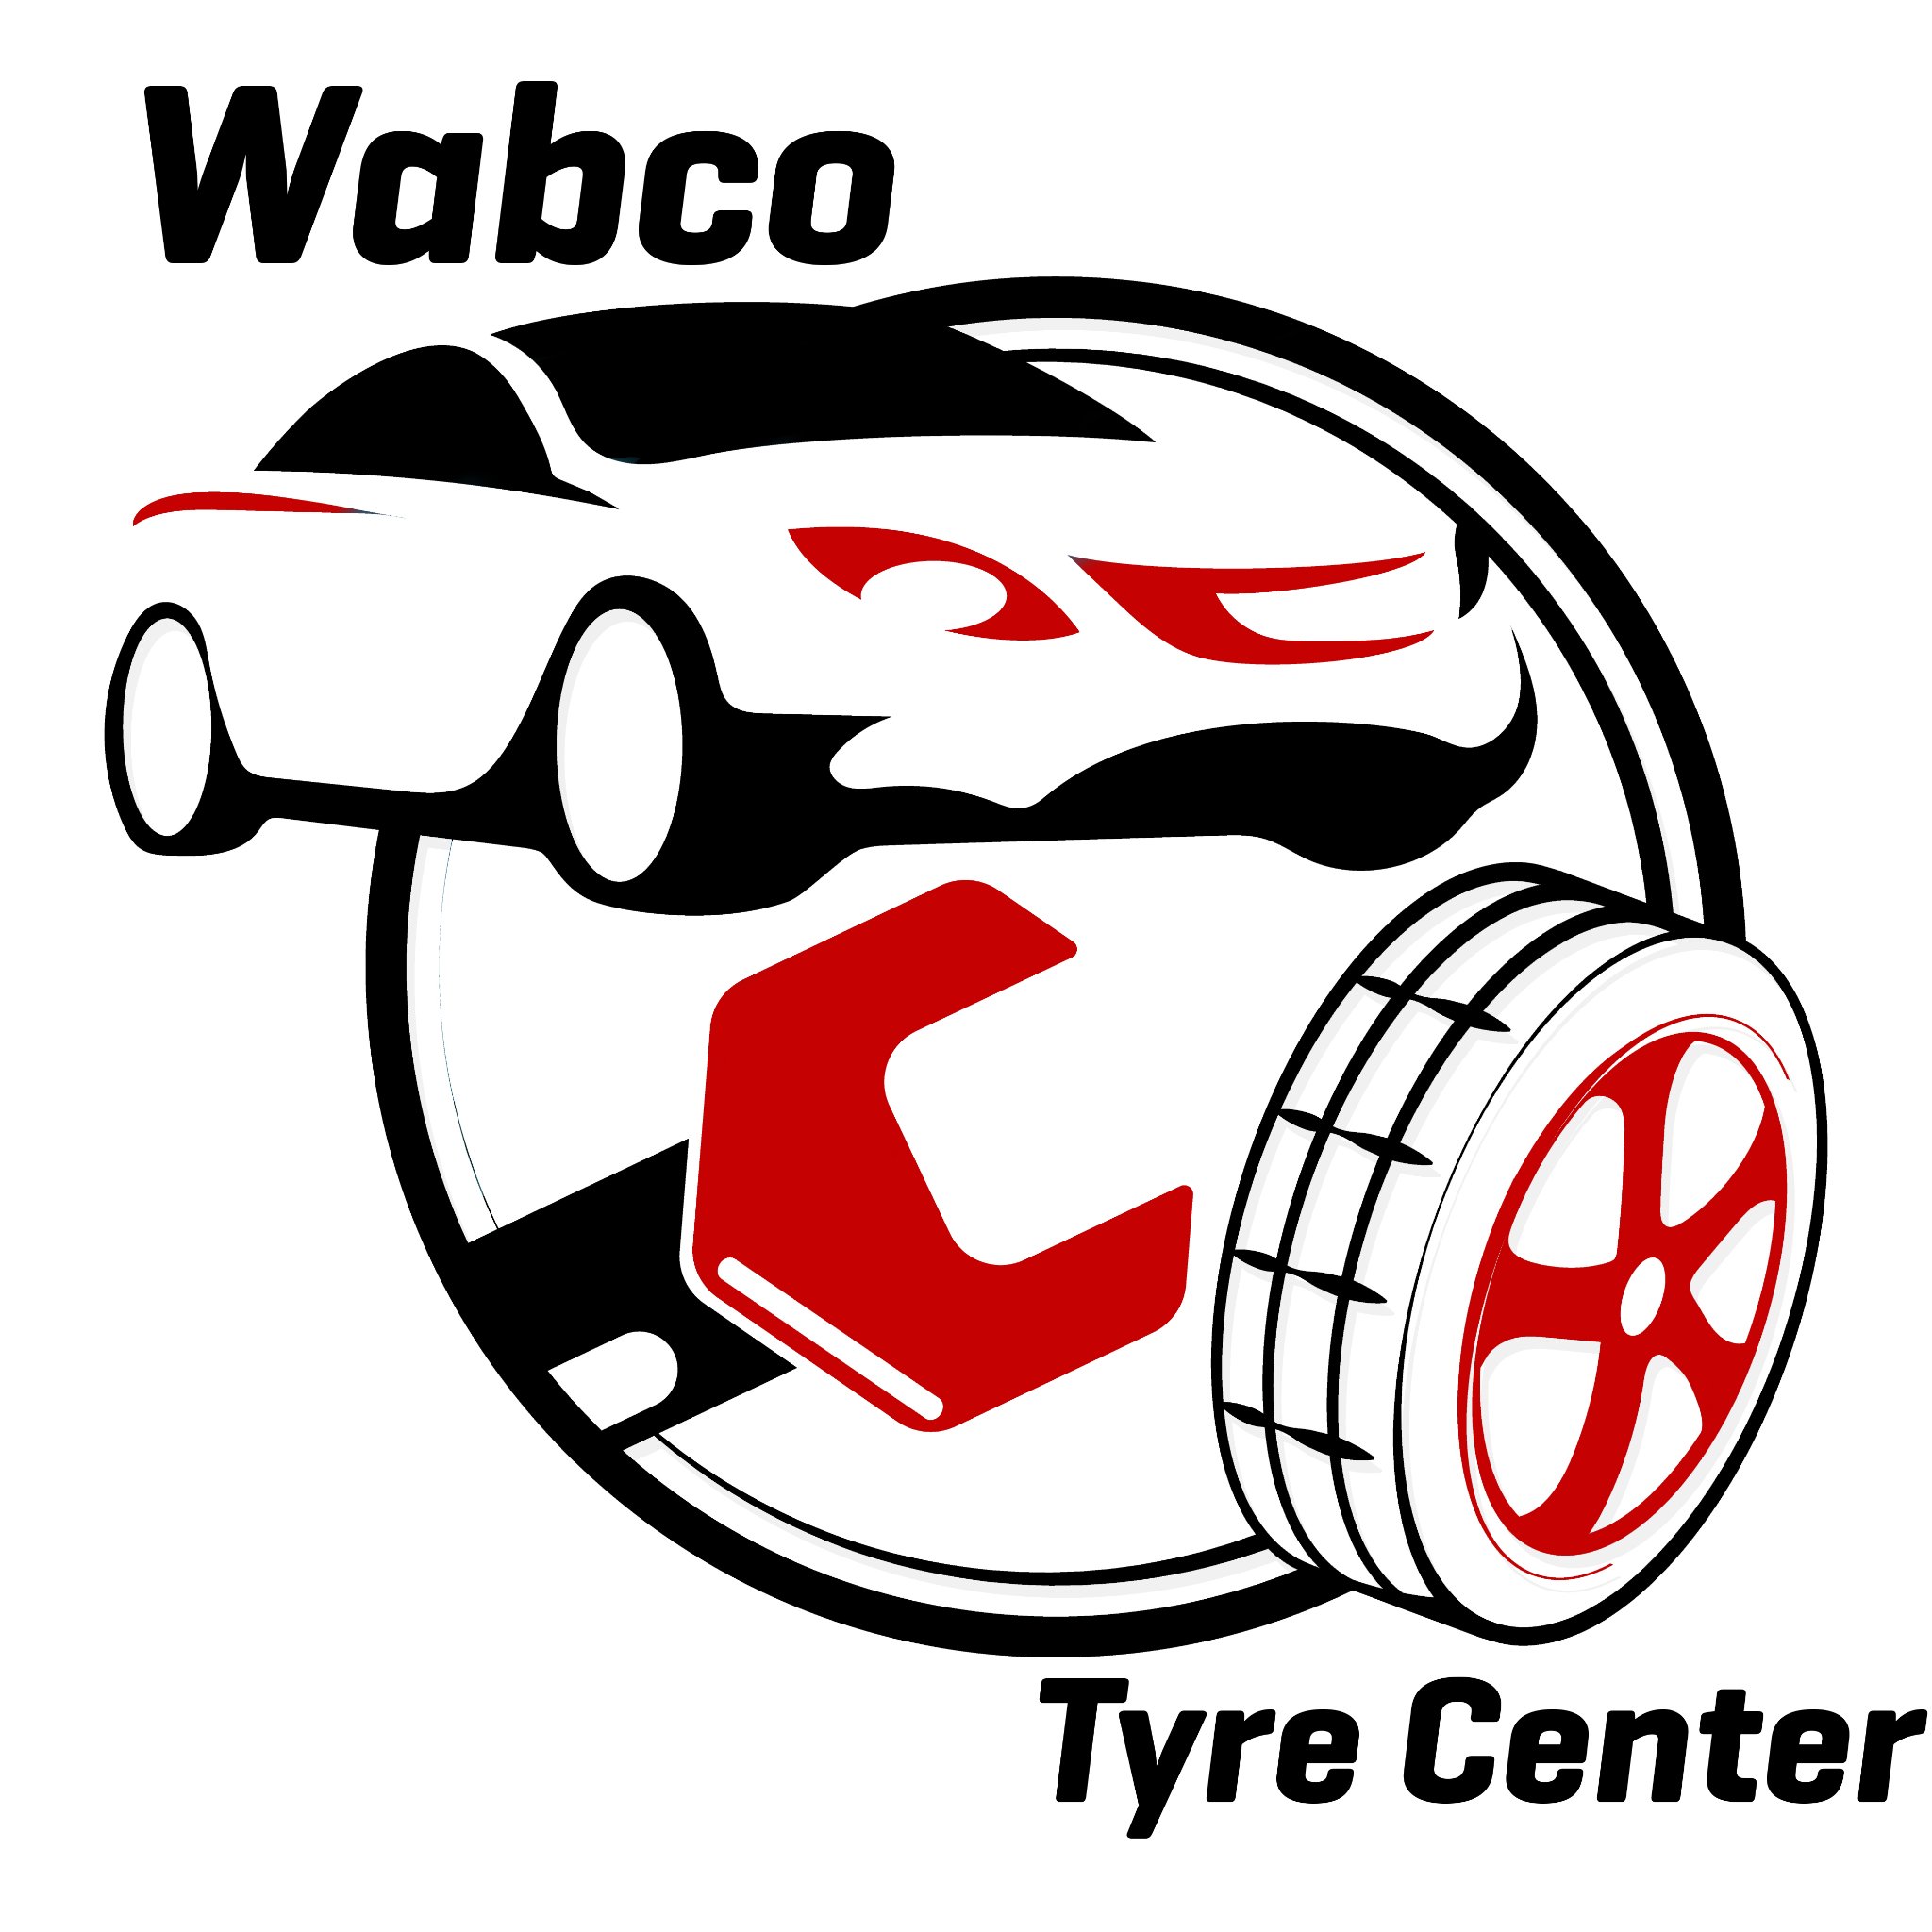 Wabco Tyre Center